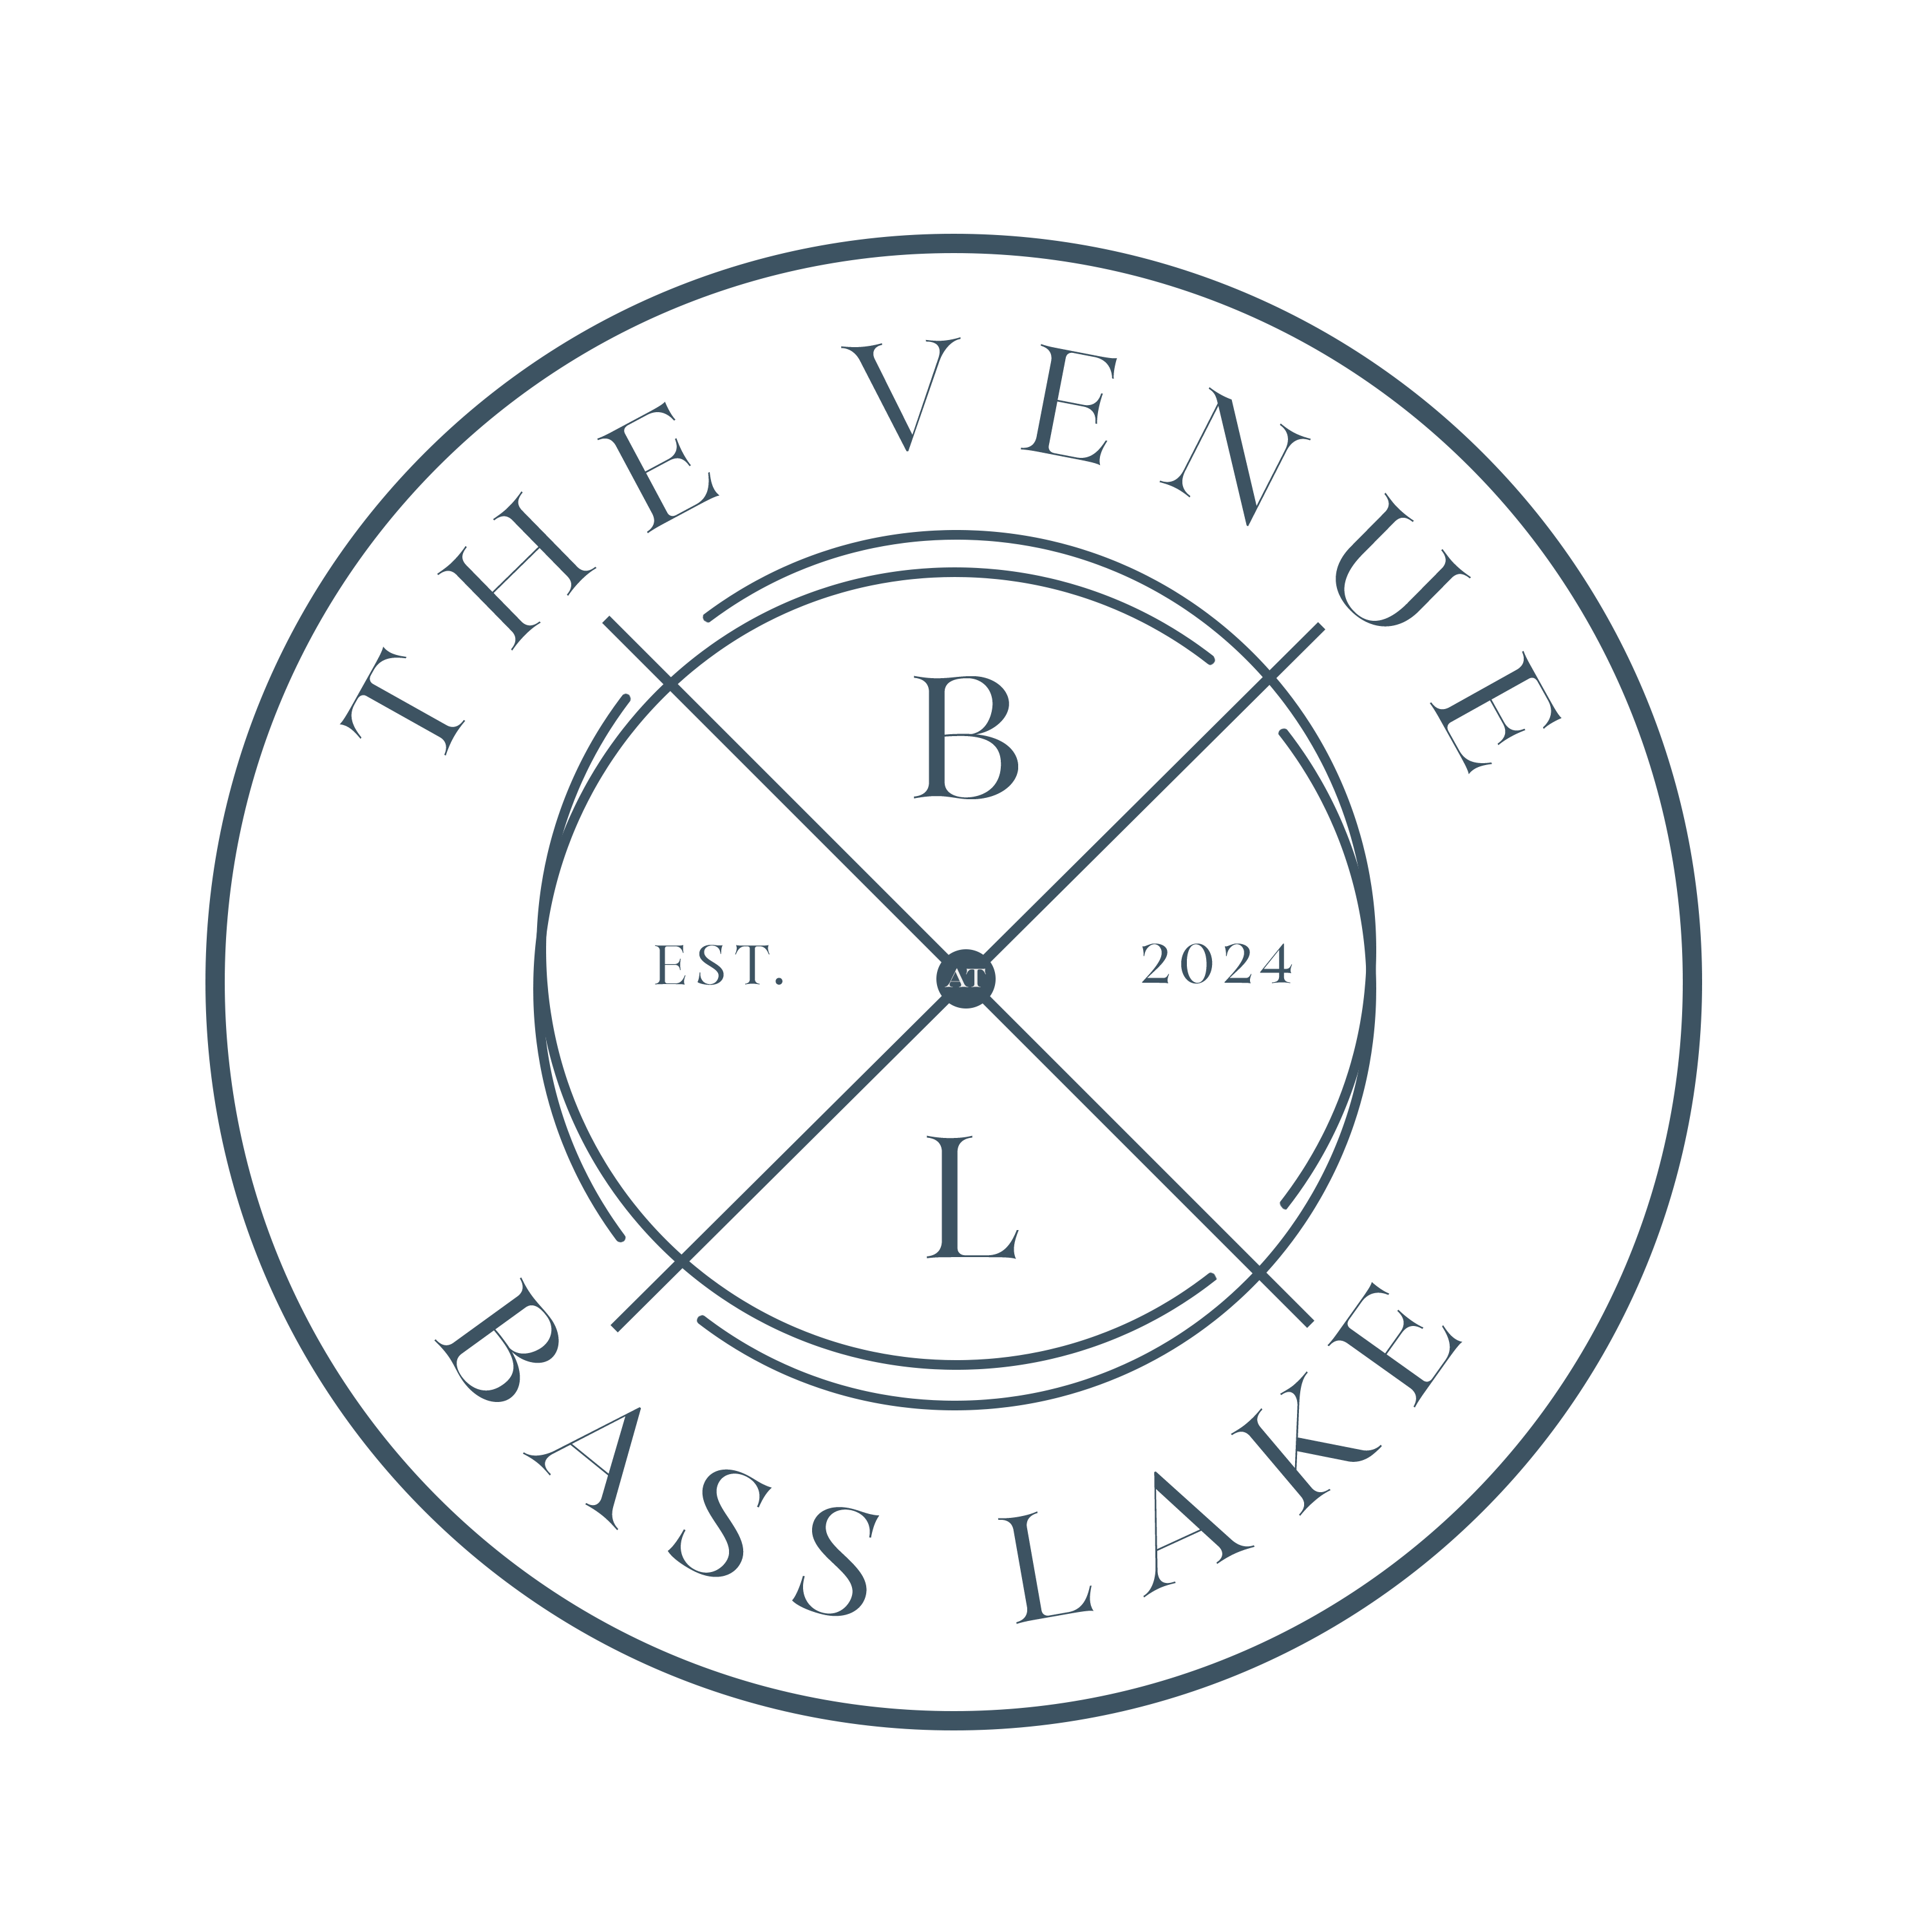 Bass Lake Venue